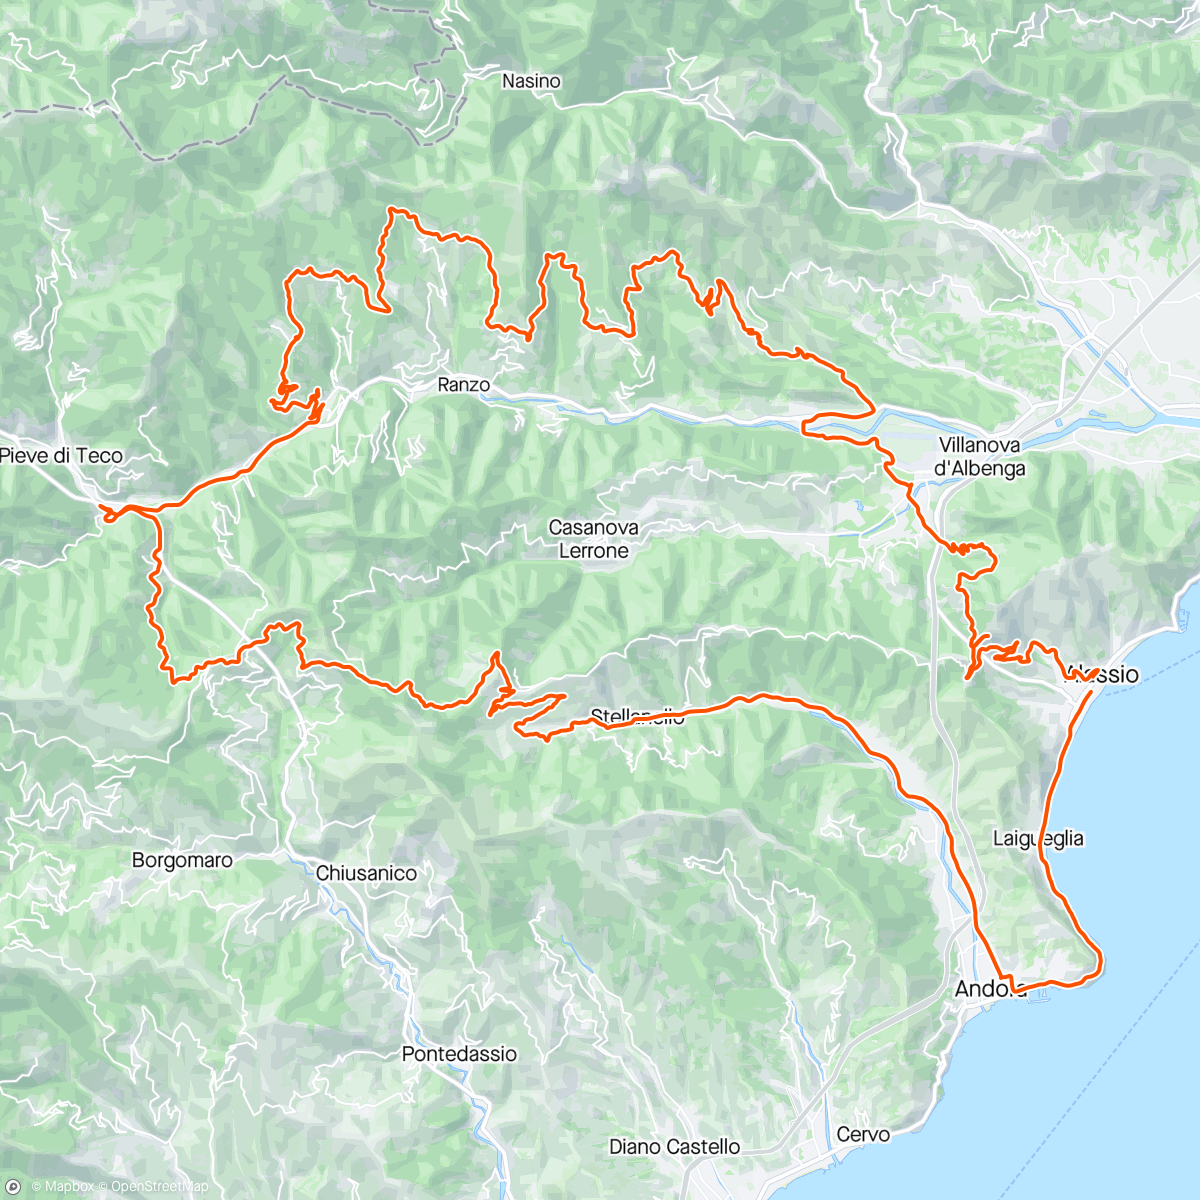 Map of the activity, Giro pomeridiano ligure